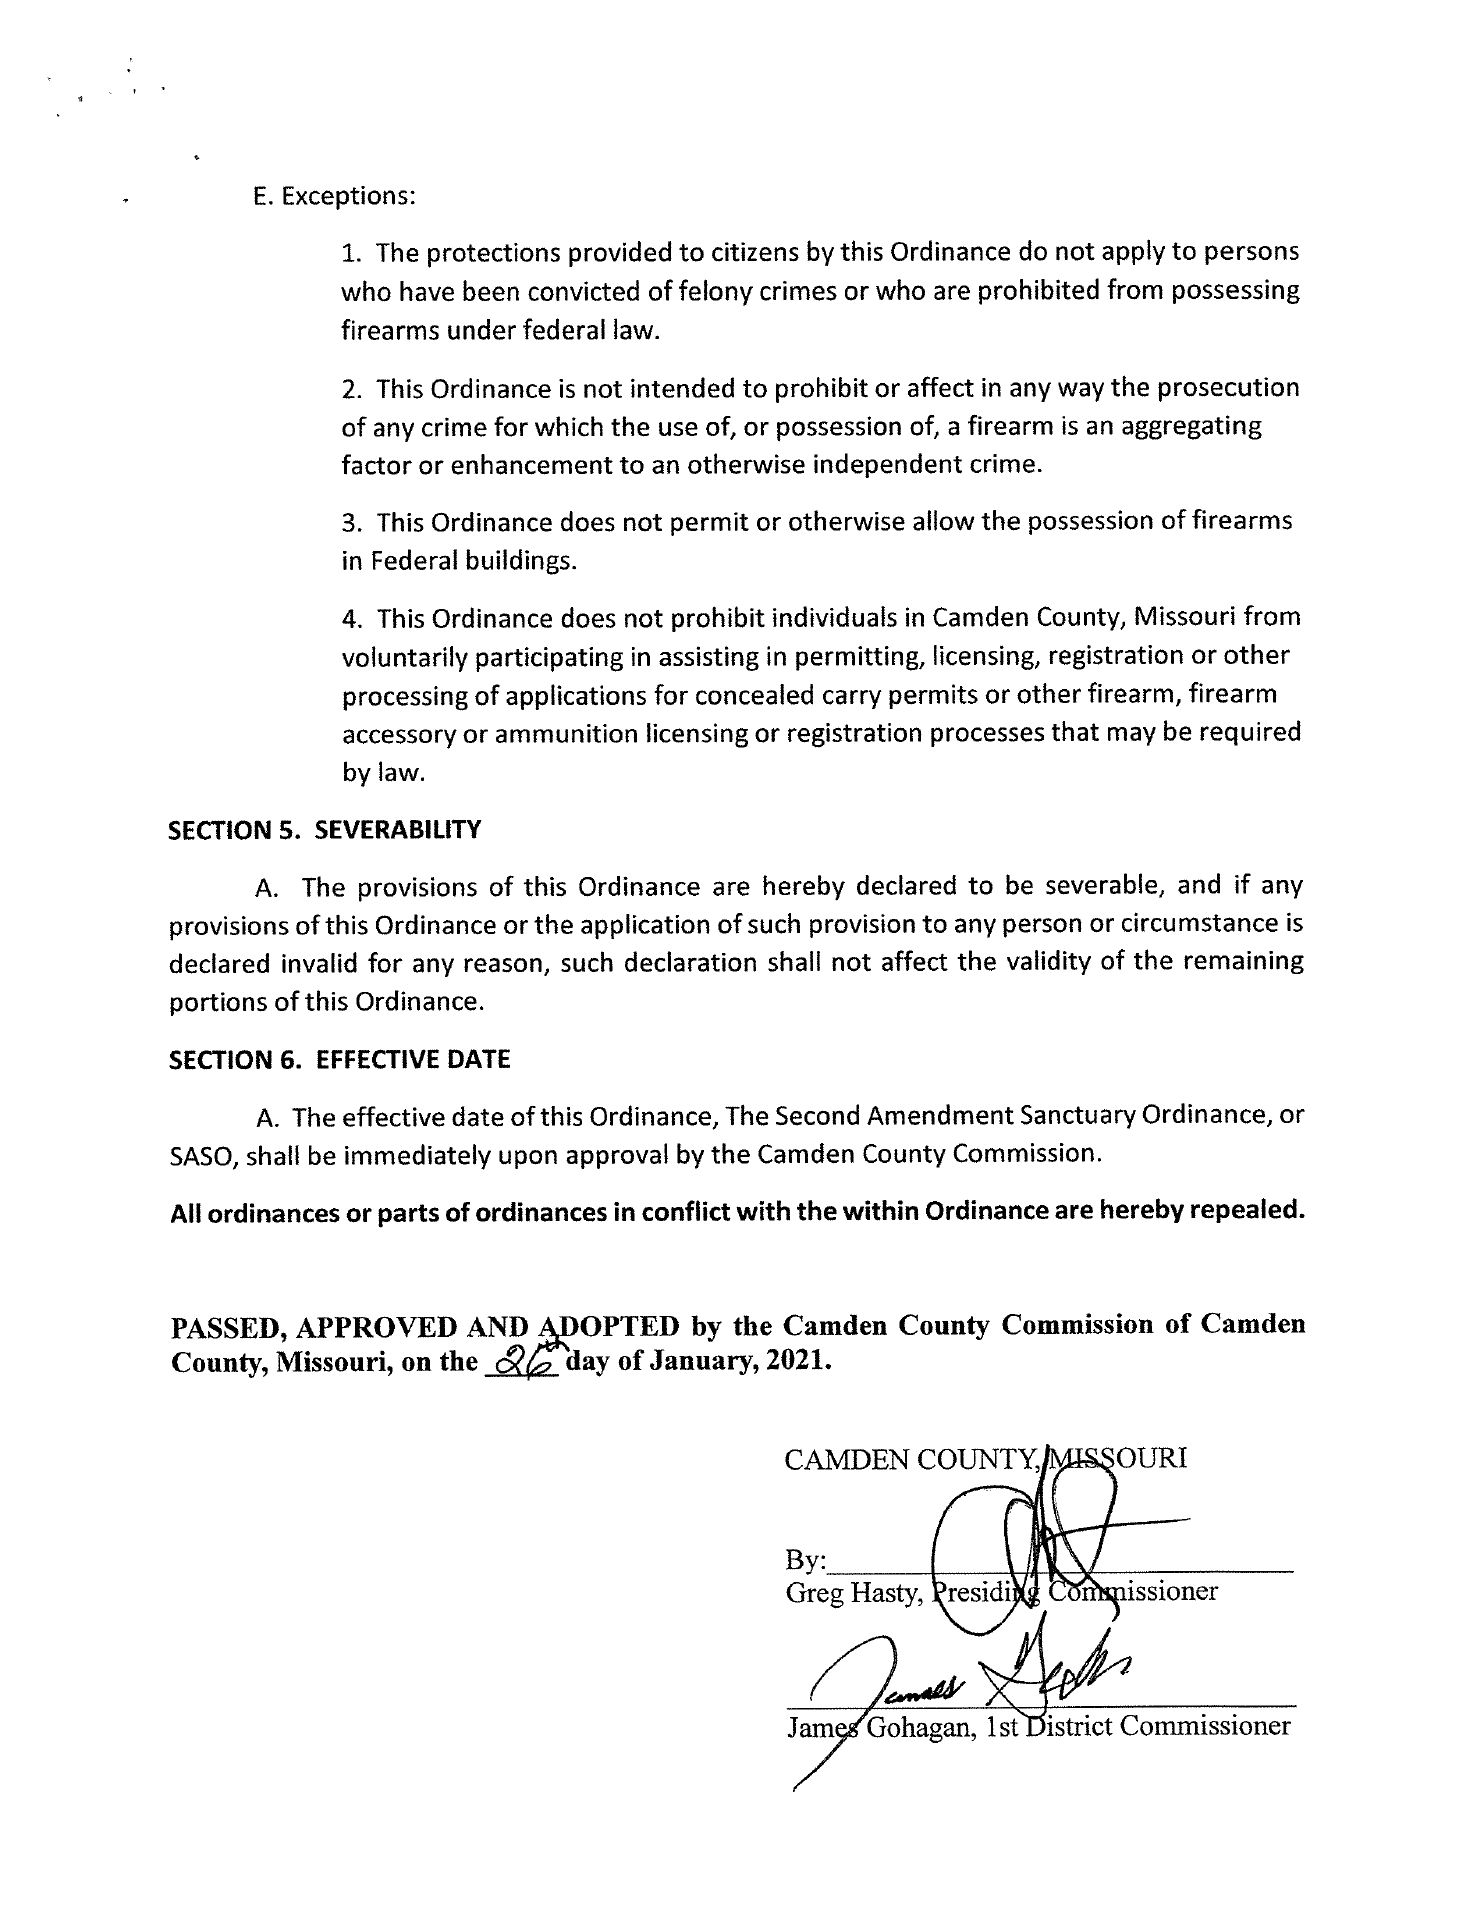 Camden County Second Amendment Sanctuary Ordinance pg-4